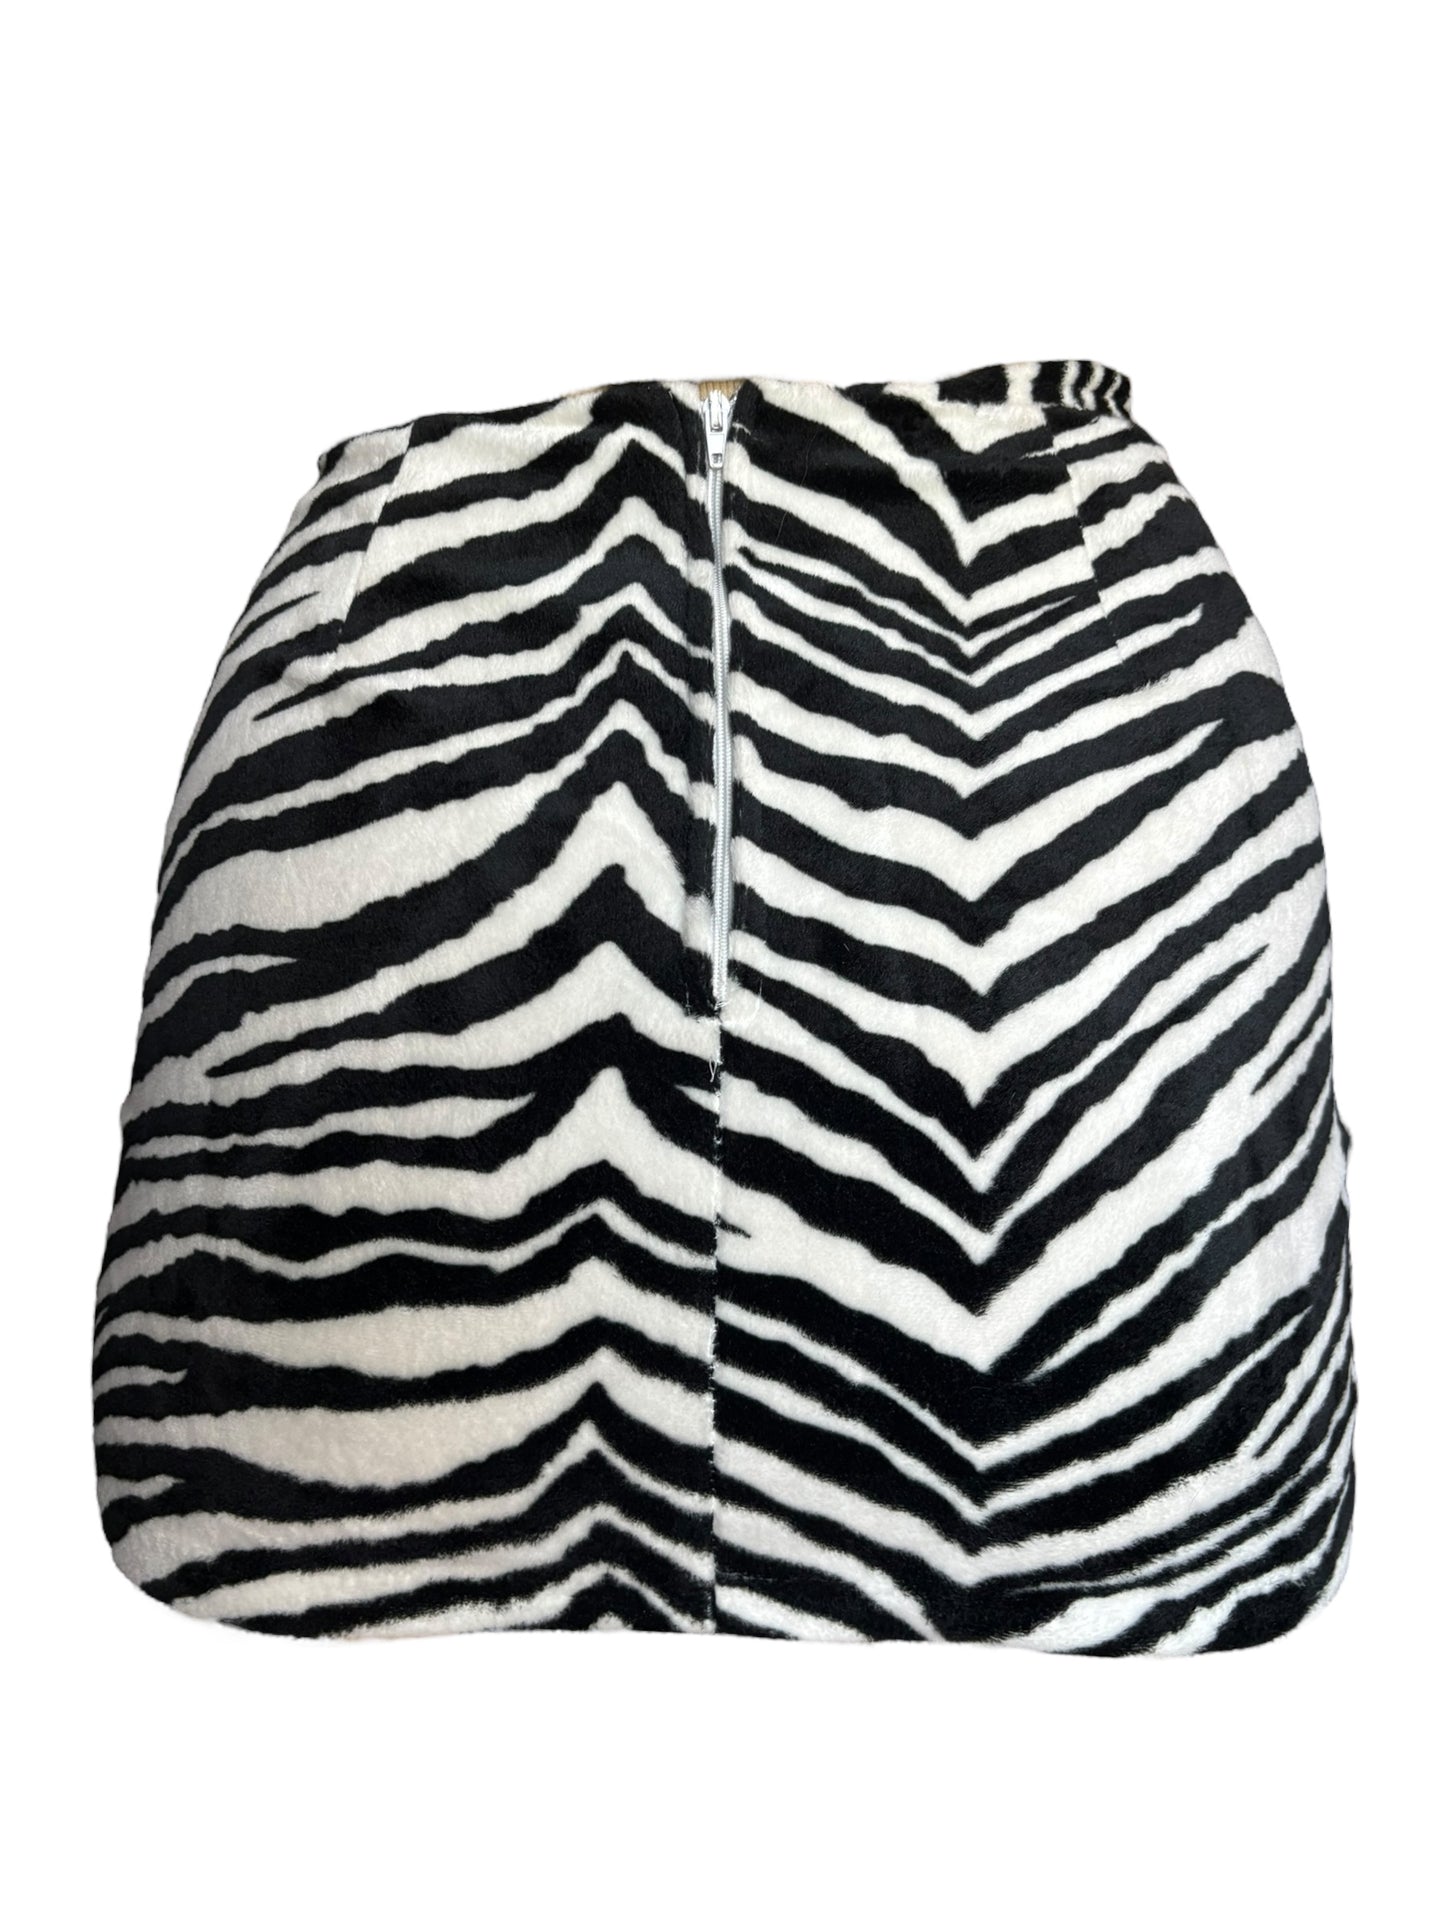 Vintage Zebra Mini Skirt - XS